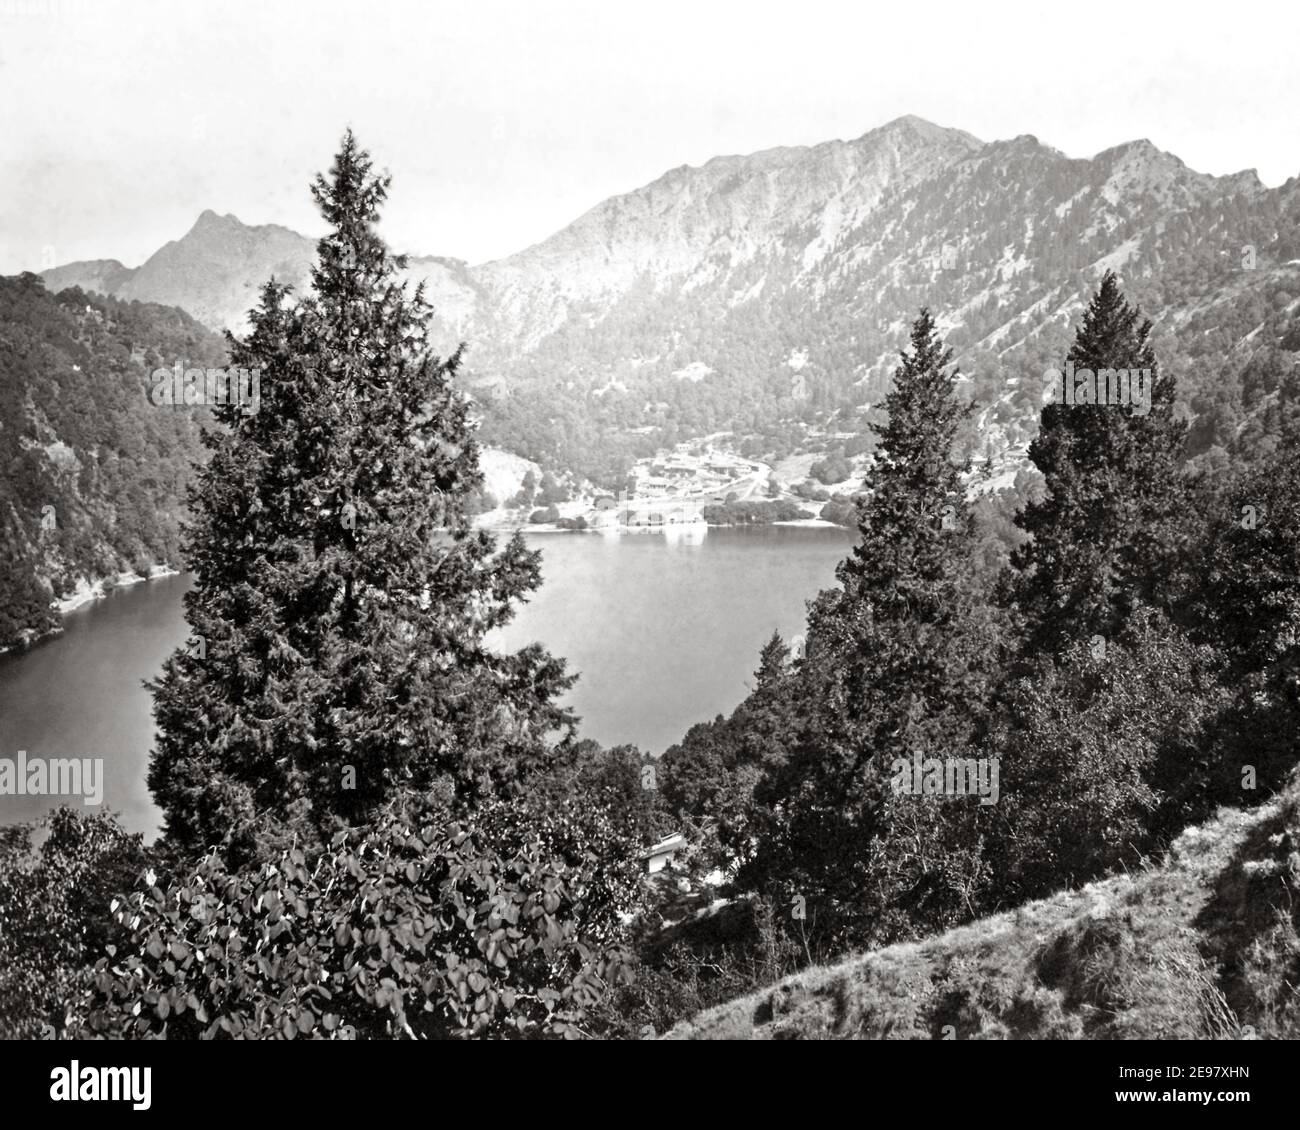 Late 19th century photograph - view of Nainital Lake, Kumaon region, India Stock Photo